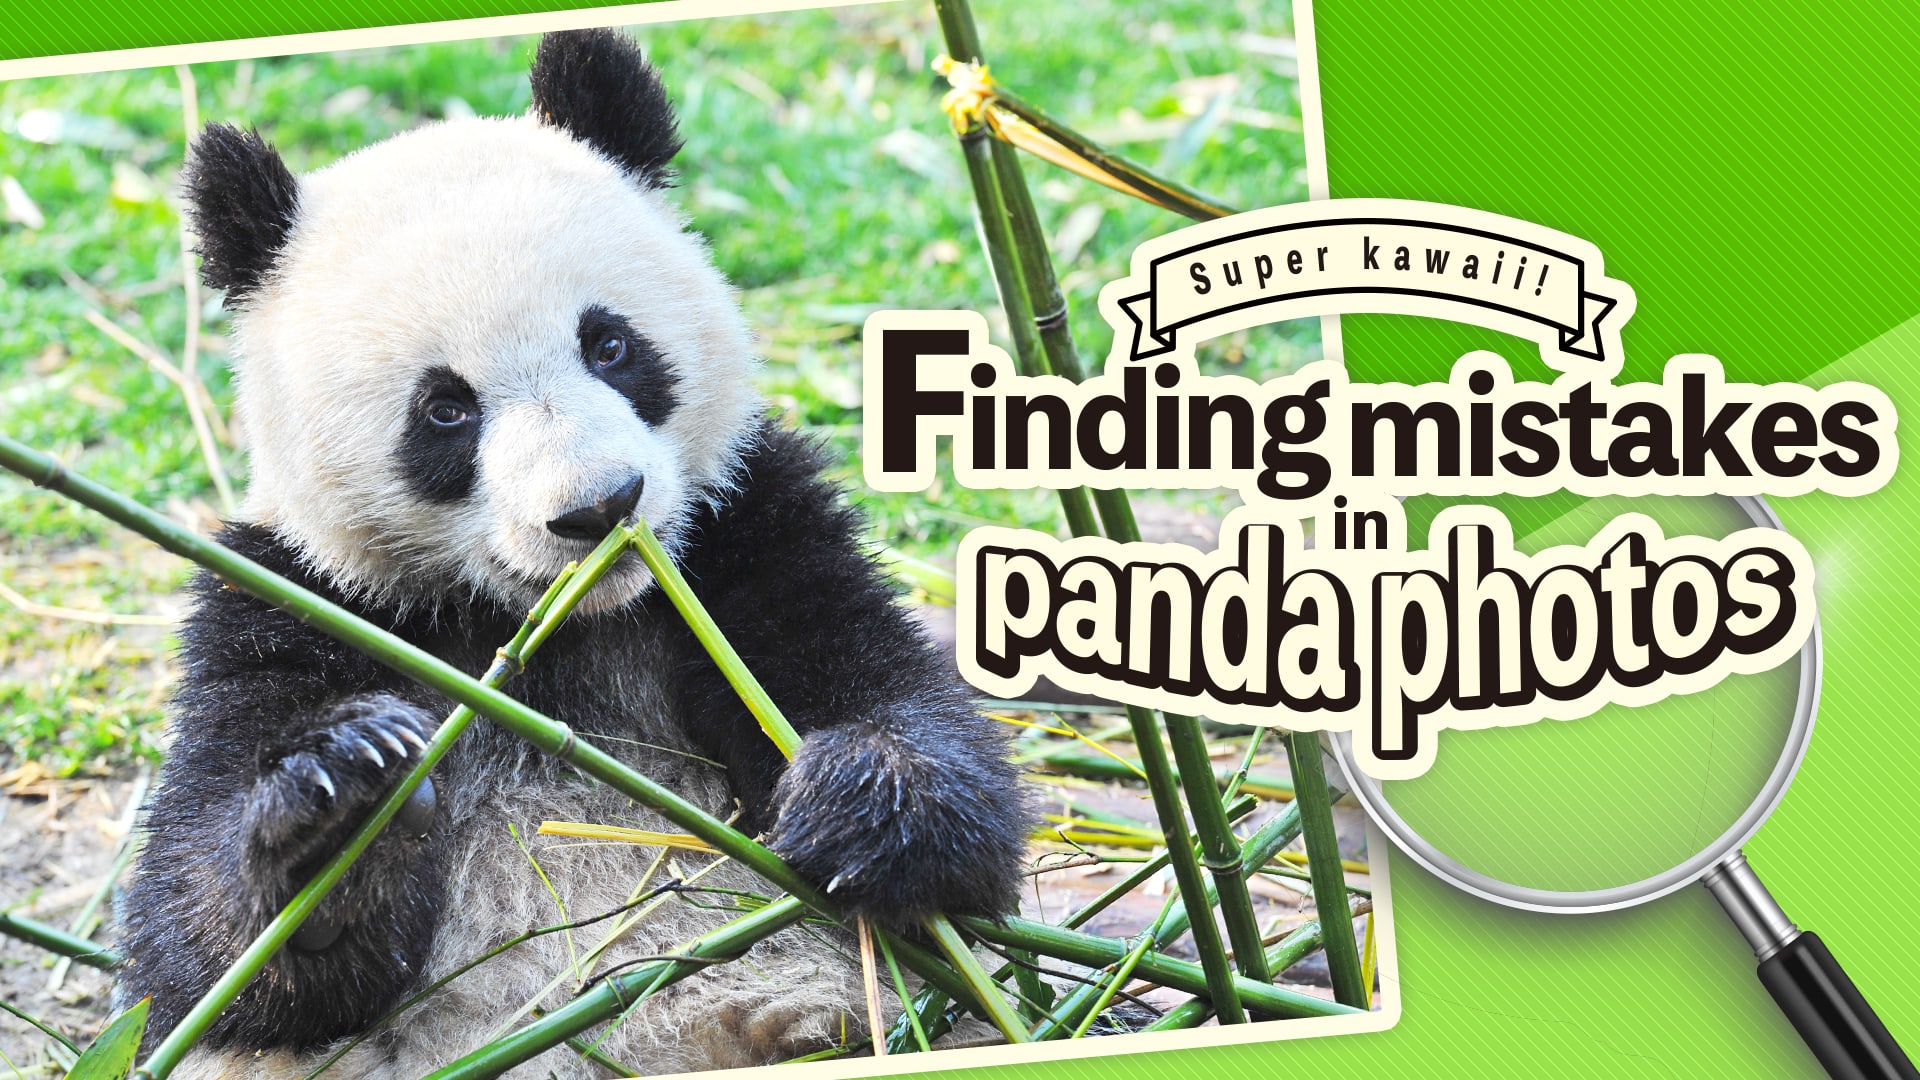 Super kawaii! Finding mistakes in panda photos